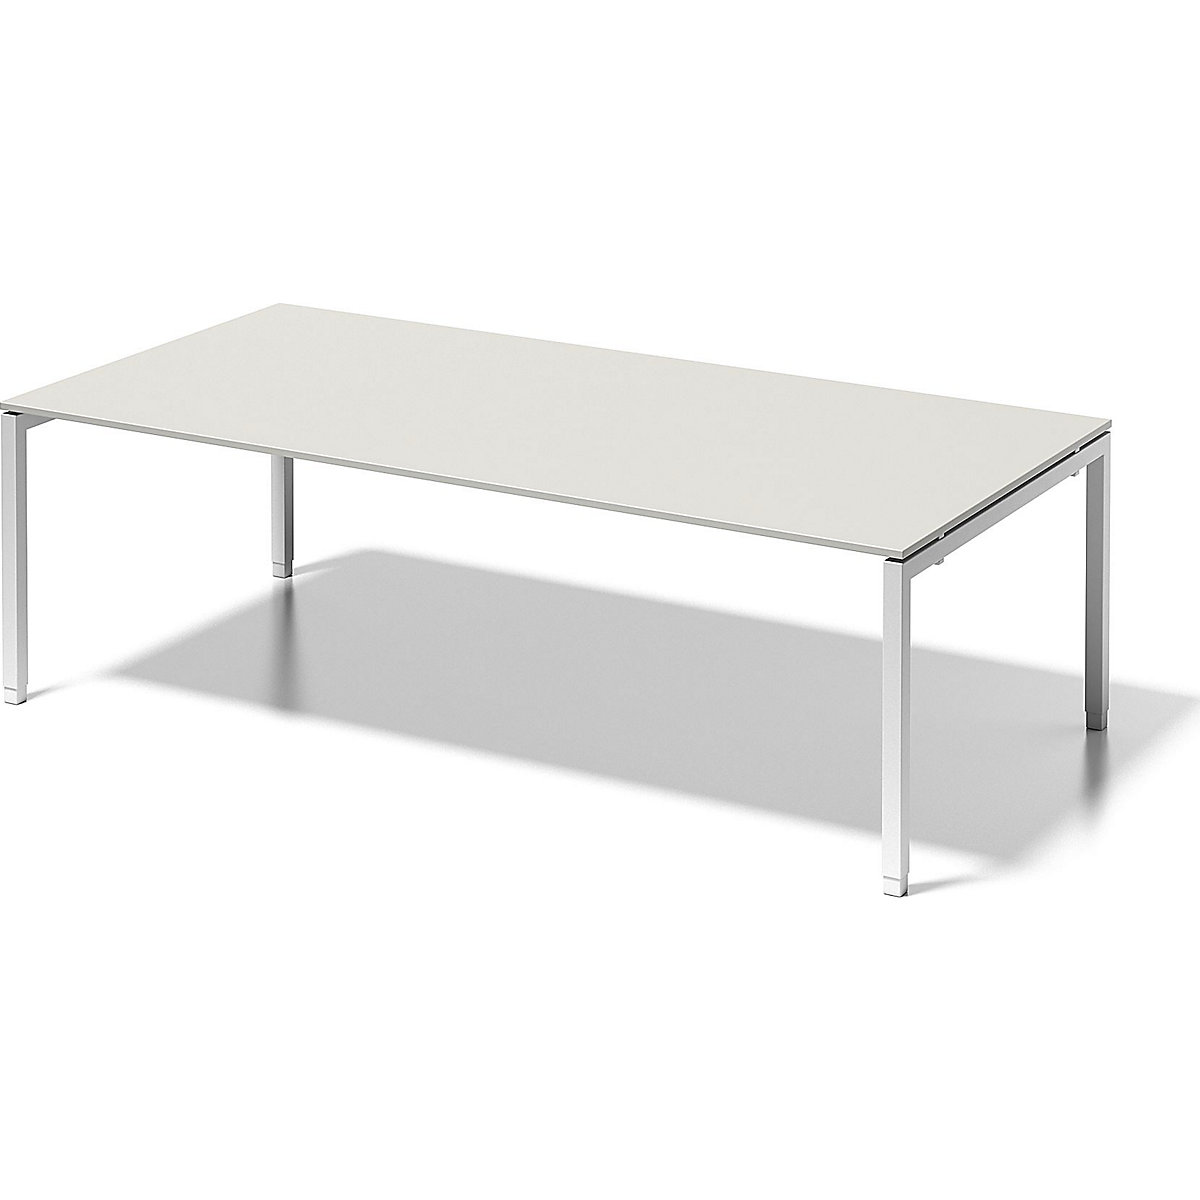 CITO desk, U-frame – BISLEY, HxWxD 650 – 850 x 2400 x 1200 mm, white frame, grey white tabletop-2